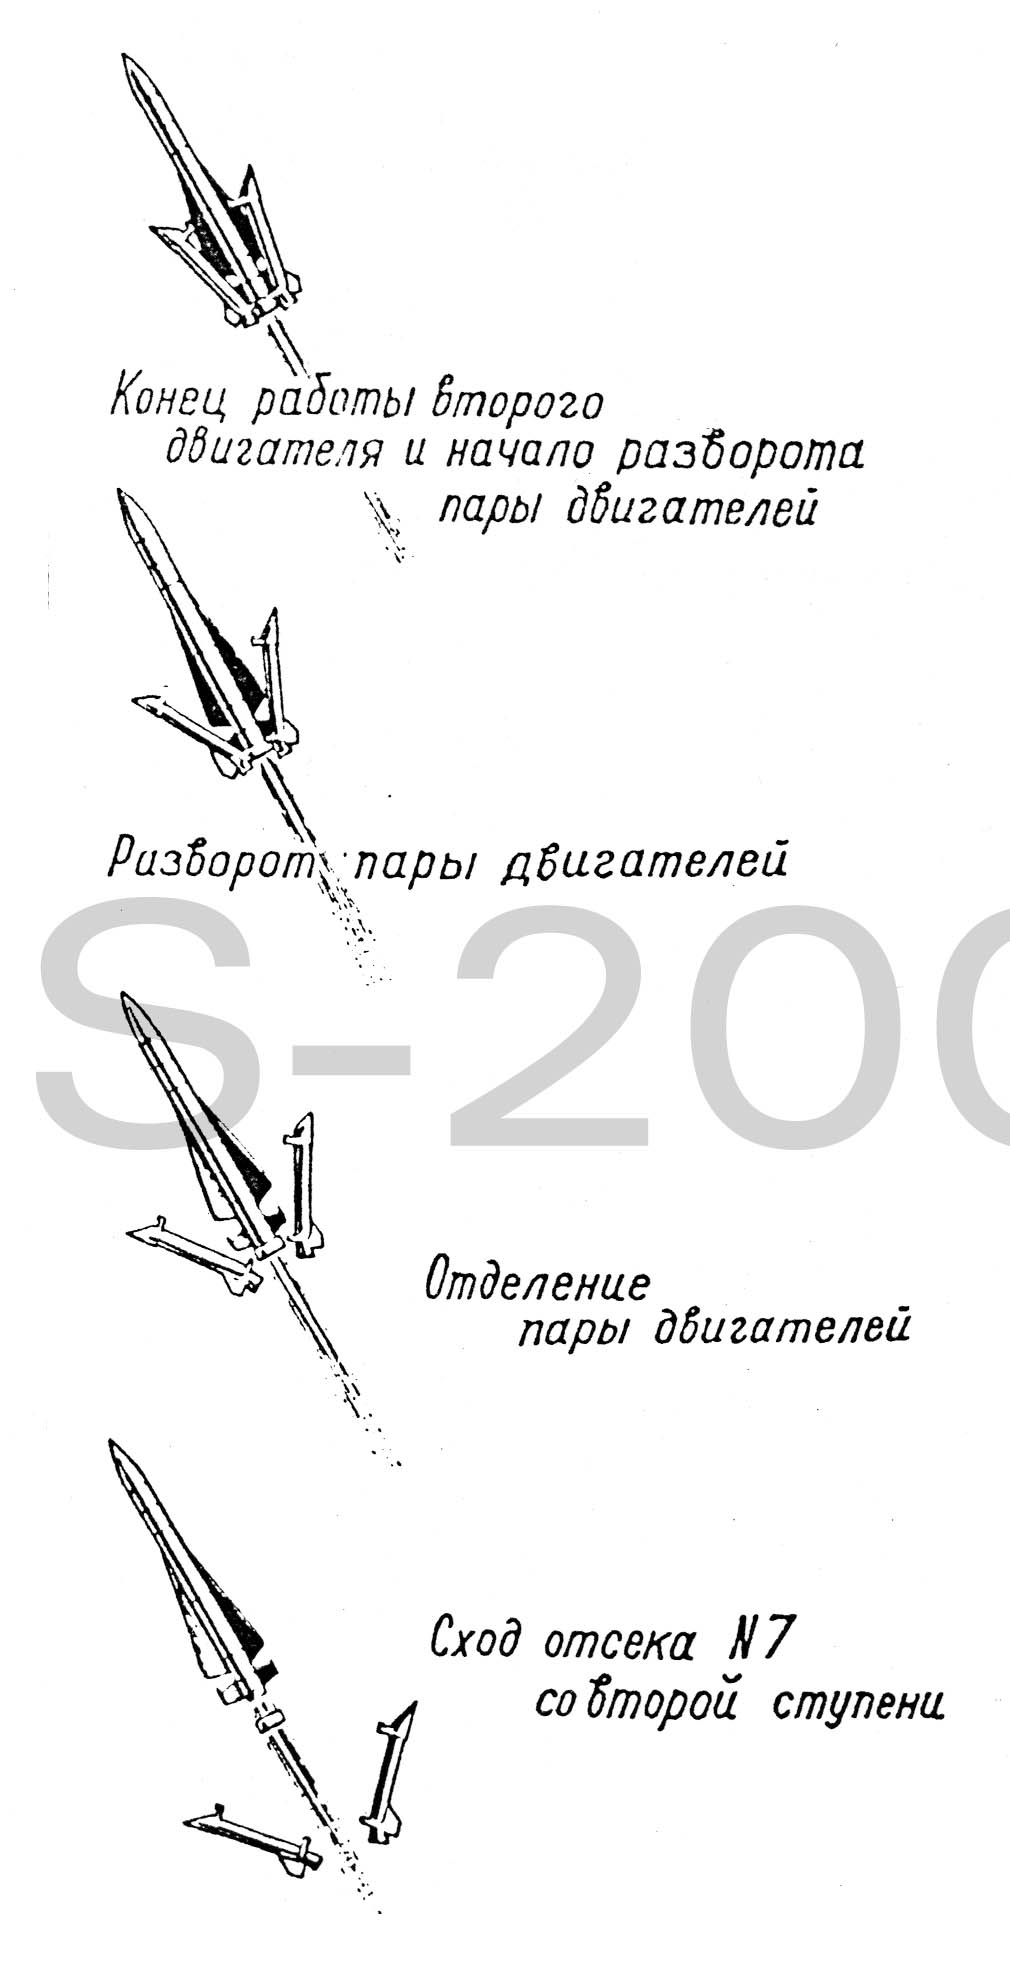 (SA-5 Gammon)هو منظومة دفاع جوية روسية بعيدة المدى. Start-2